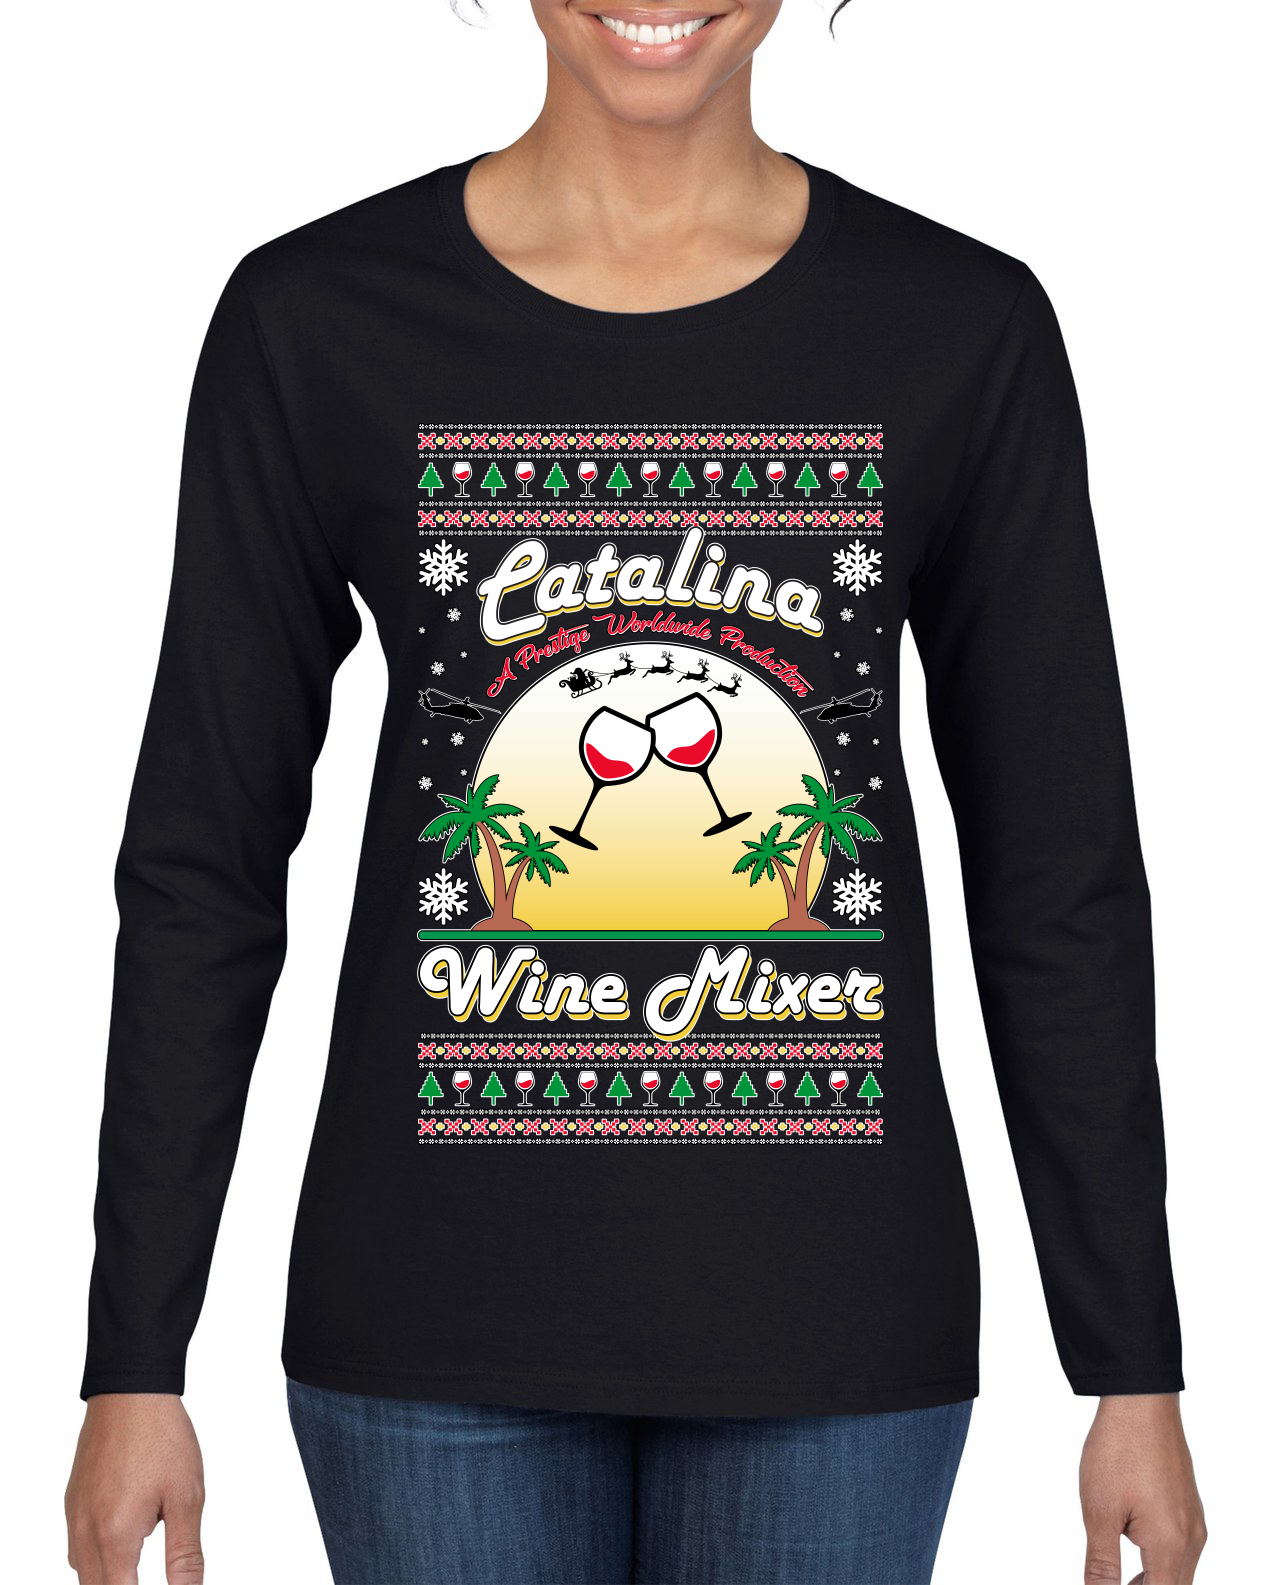 Wild Bobby Step Bros Catalina Wine Mixer Xmas Holiday Movie Humor Ugly Christmas Sweater Women Graphic Long Sleeve Tee, Black, Small - image 1 of 5